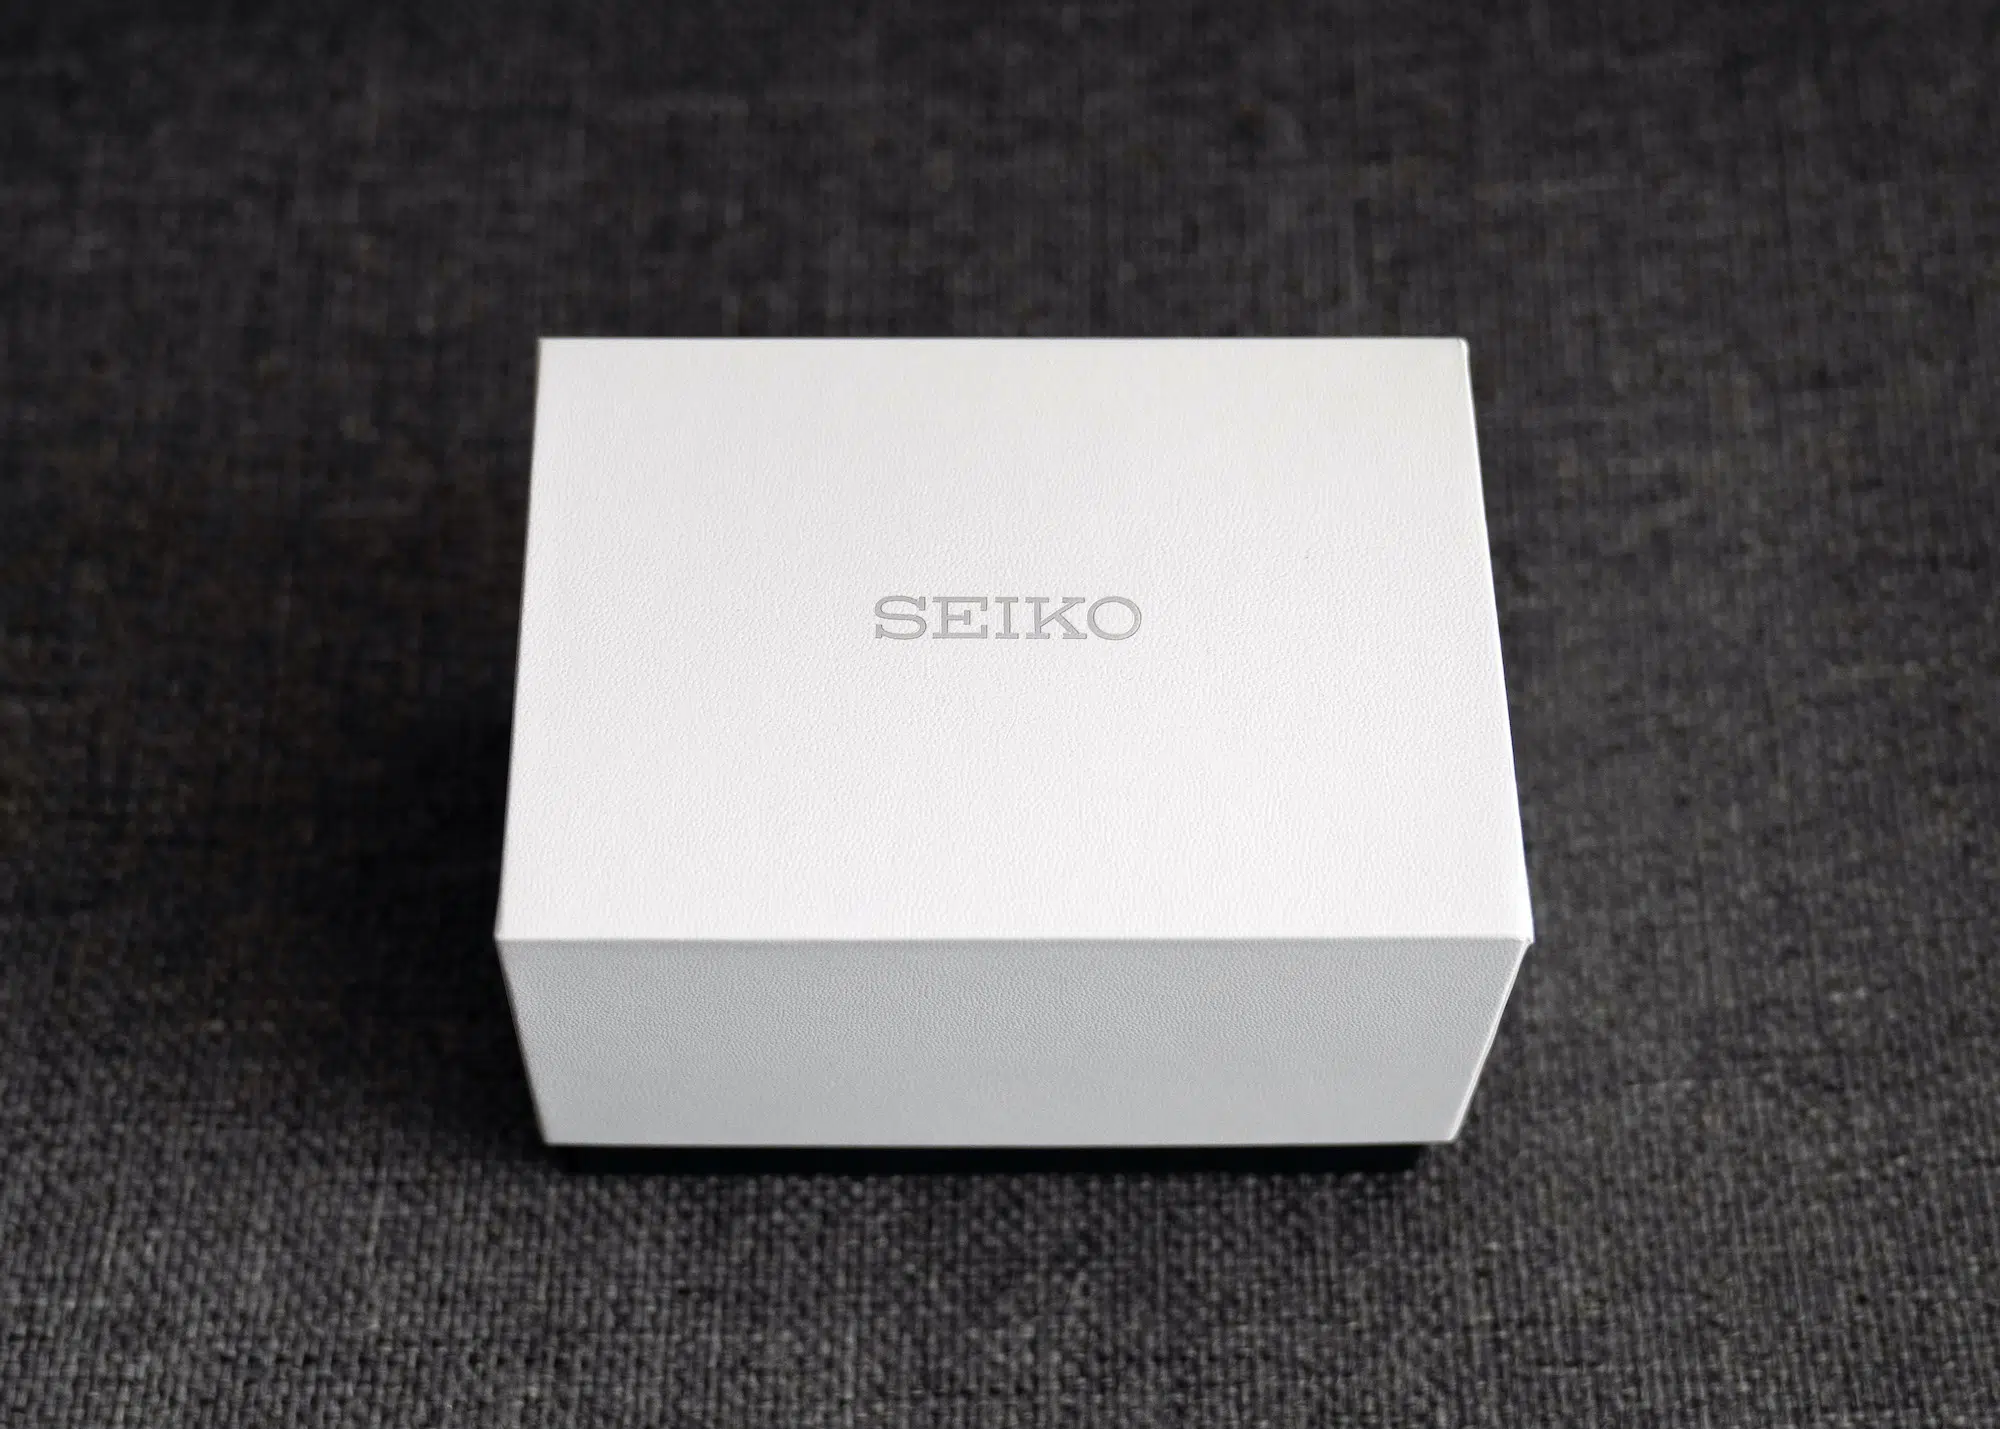 Seiko SUP880 box